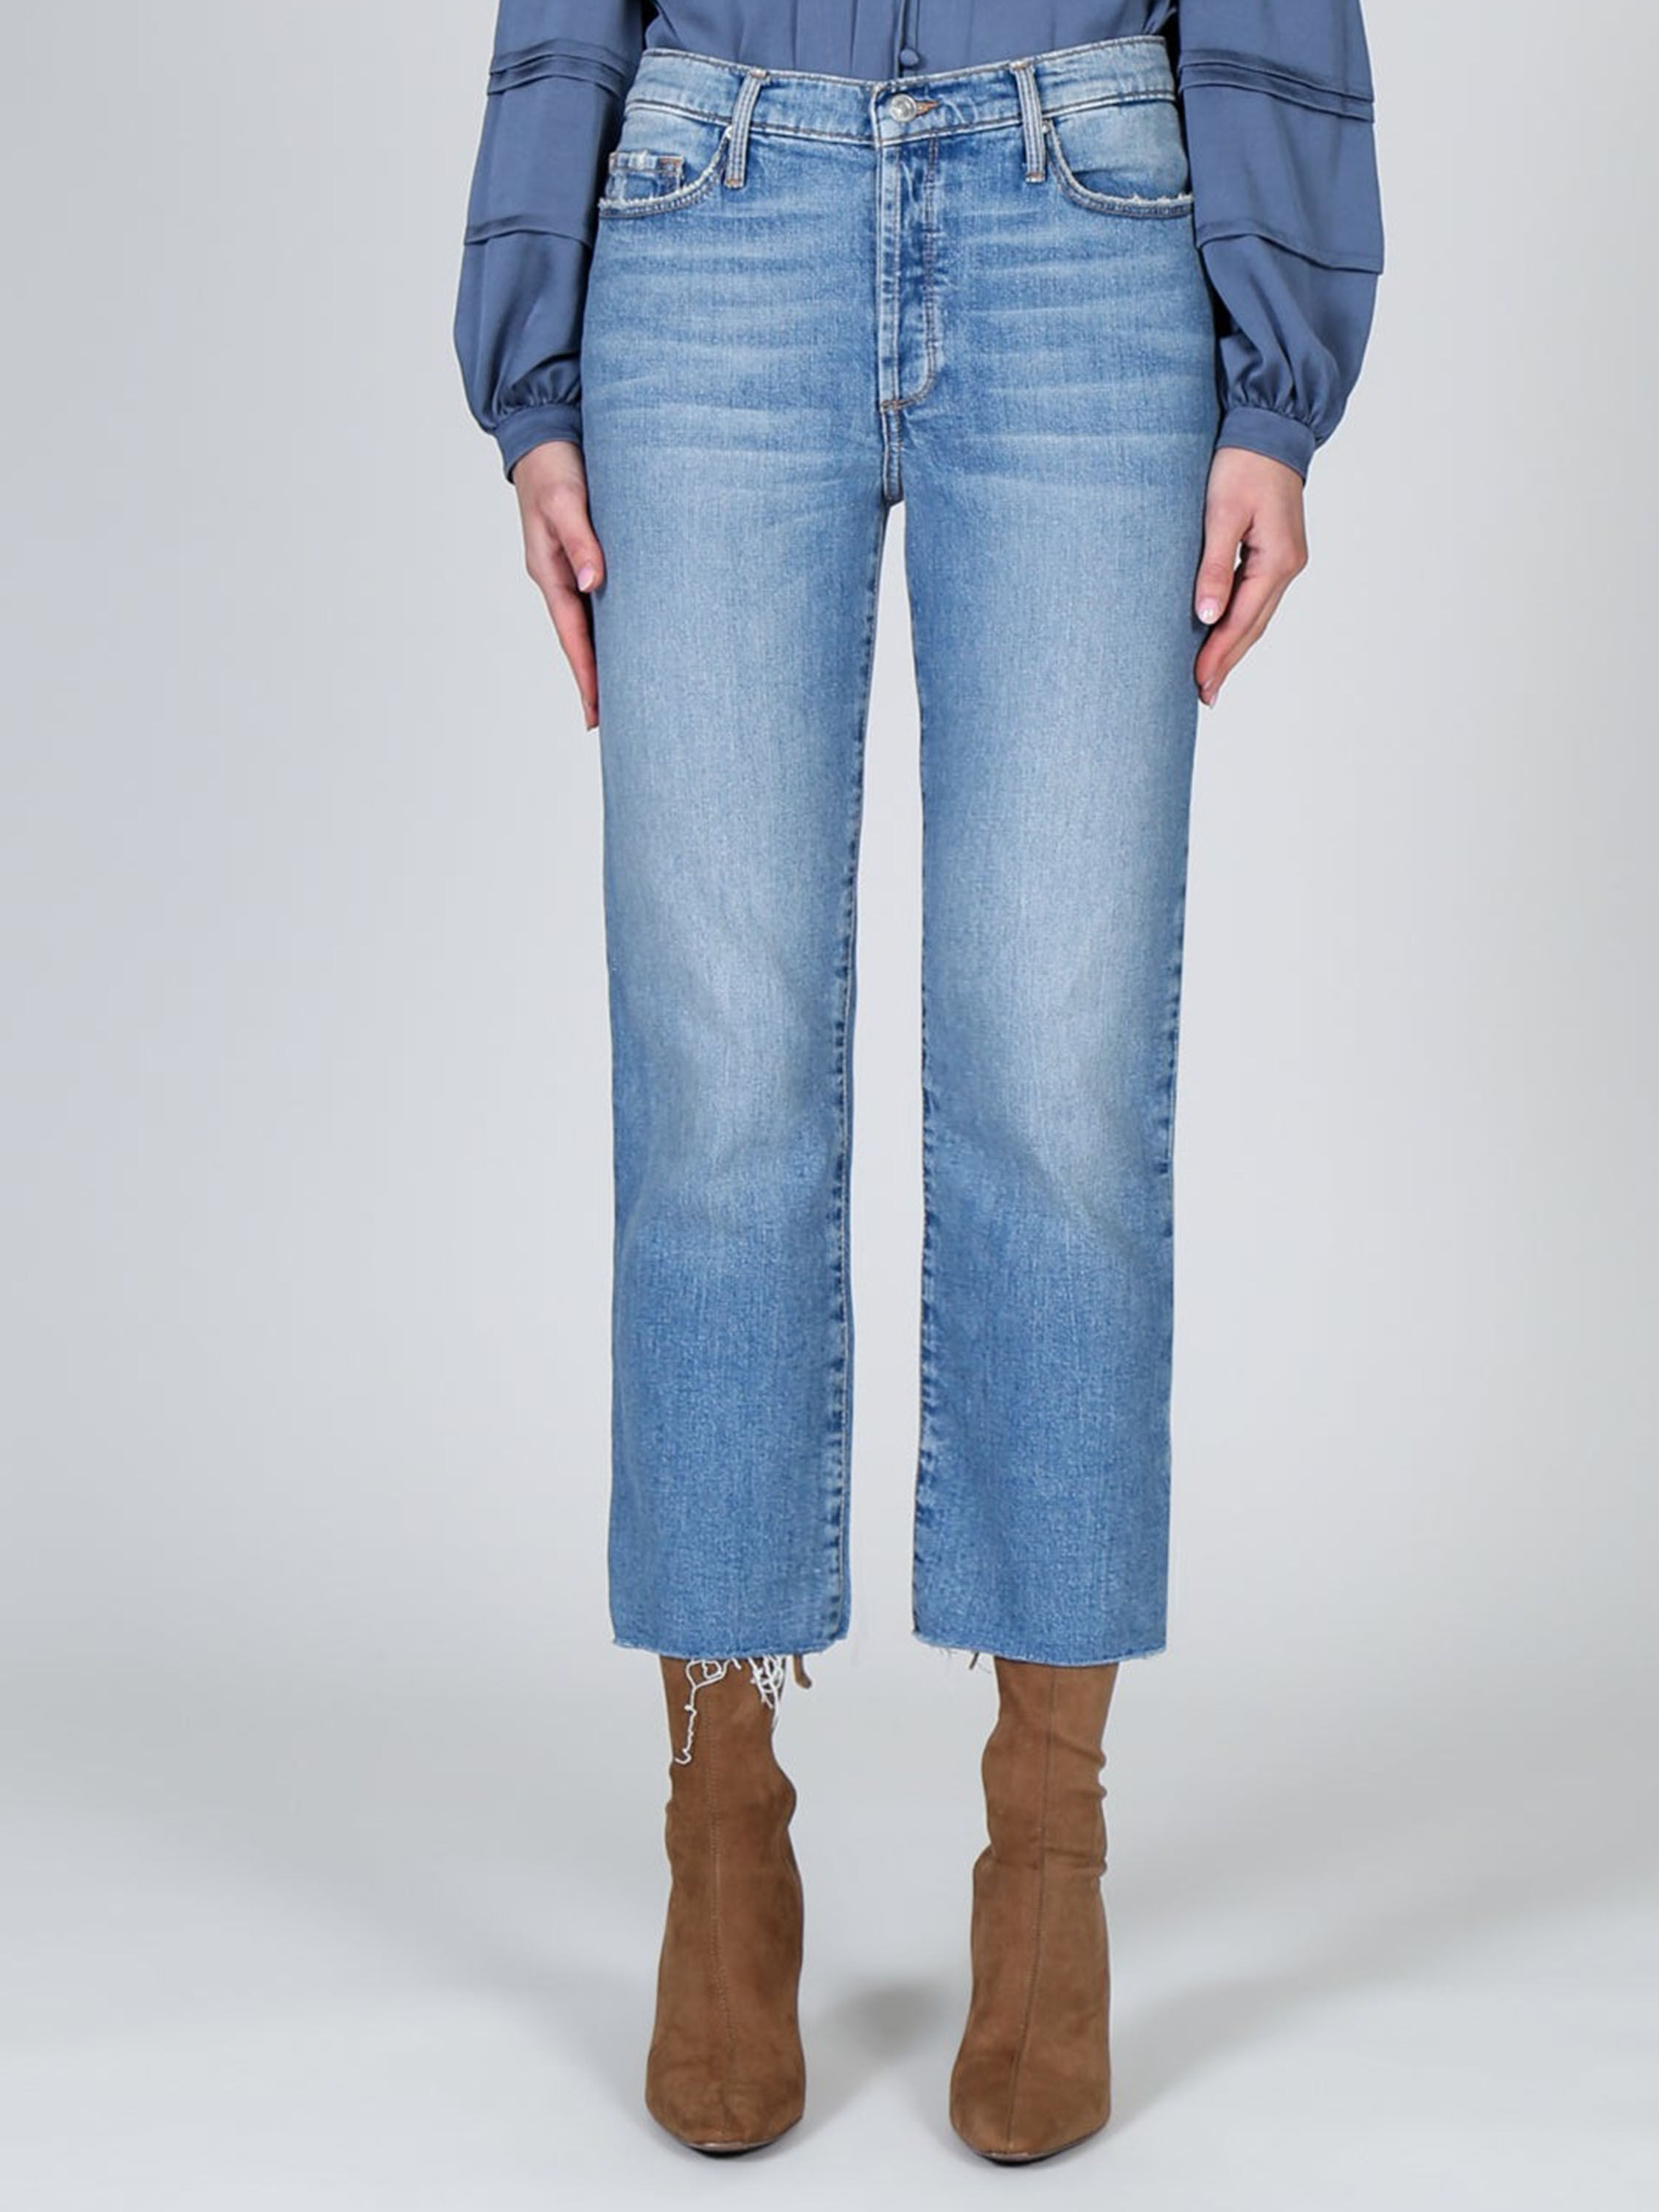 Jeans for Women | Women's Denim Pants, Skirt, Jackets | NIC+ZOE